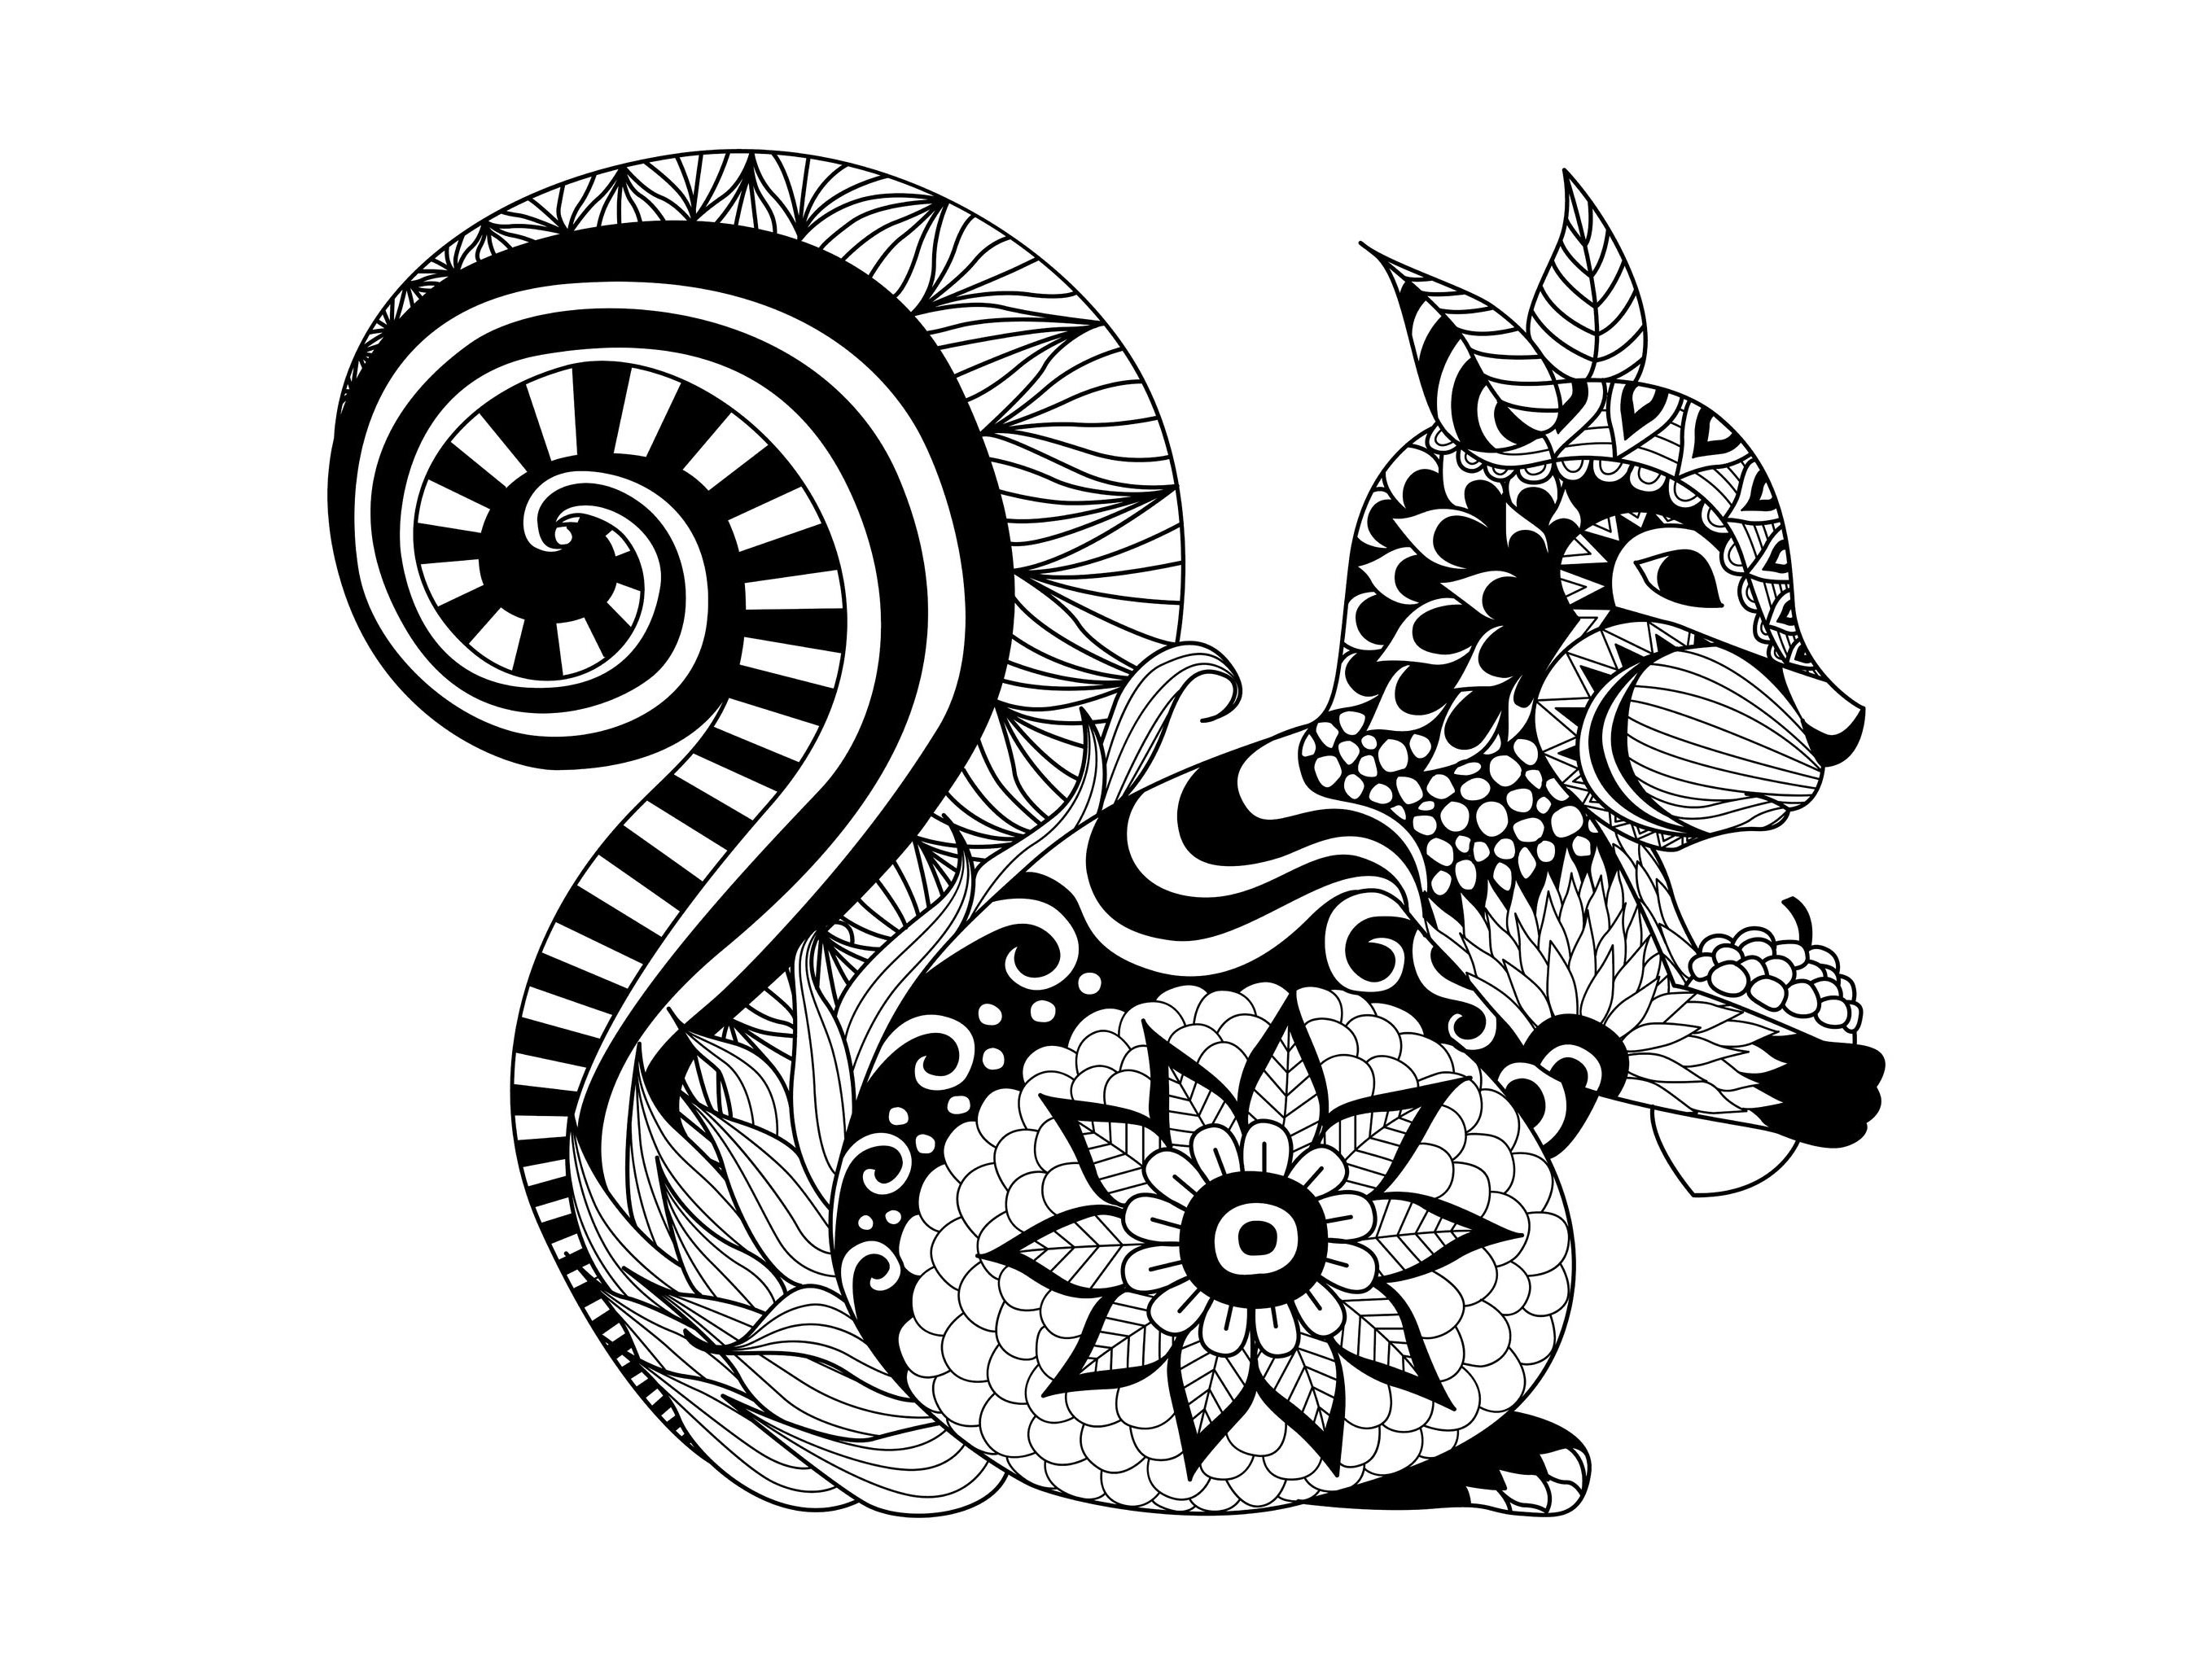 Zentangle squirrel drawing, by Bimdeedee (source: 123rf)